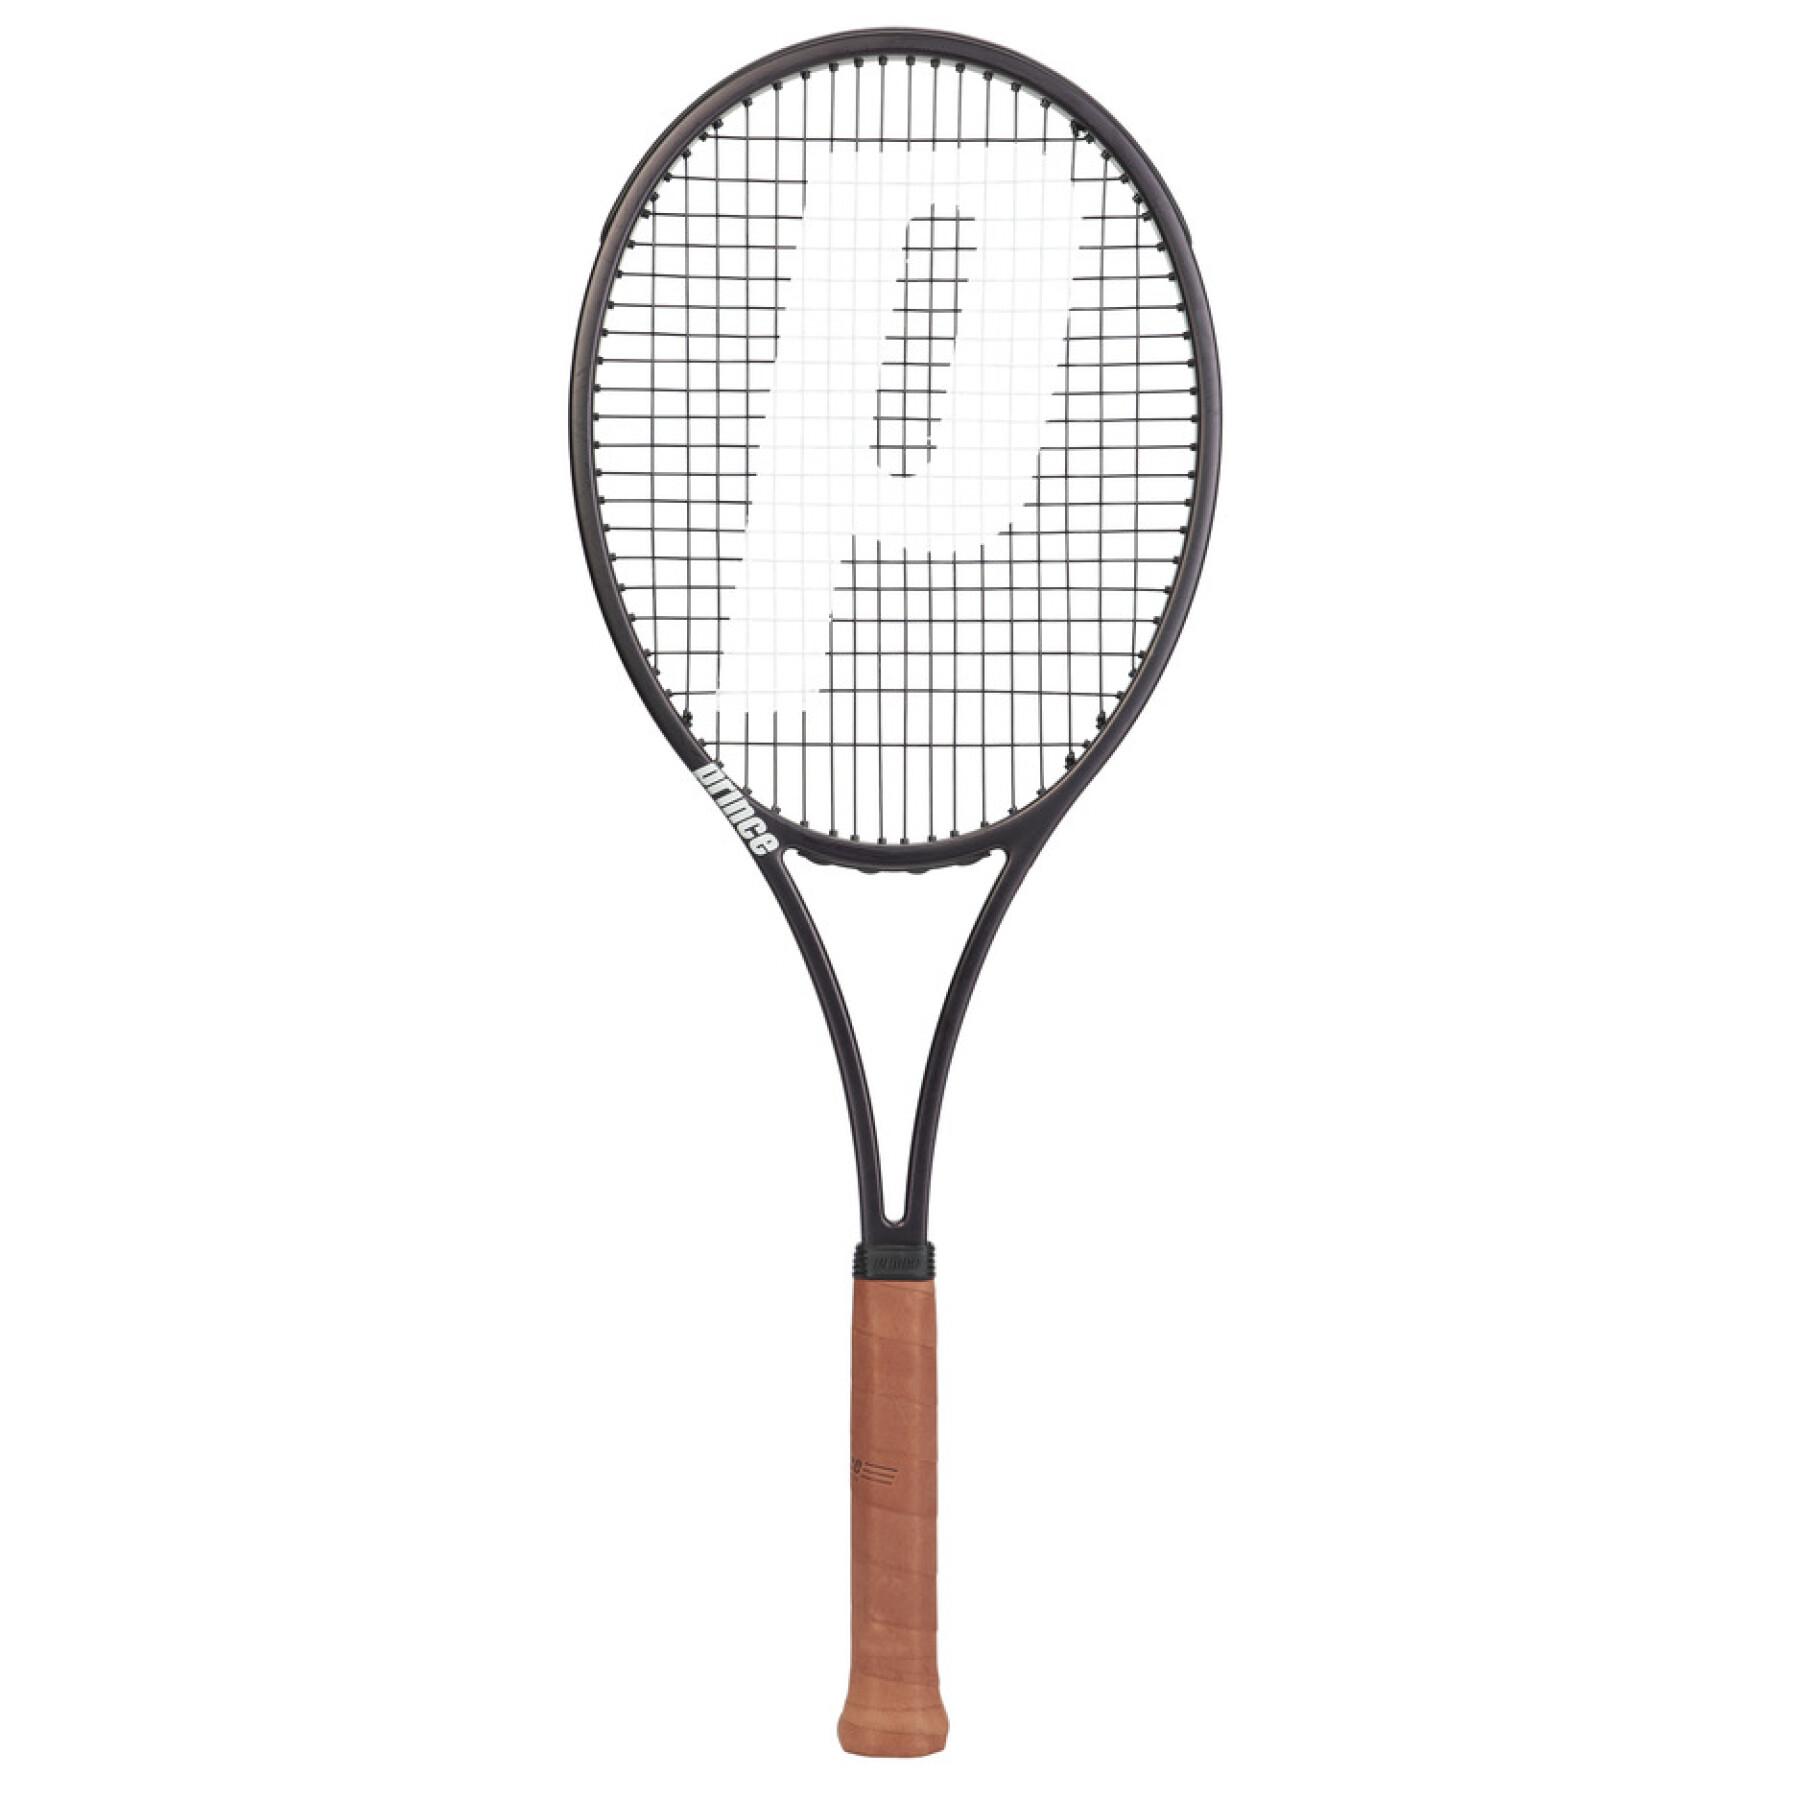 Tennis racket Prince phantom 93p 18x20